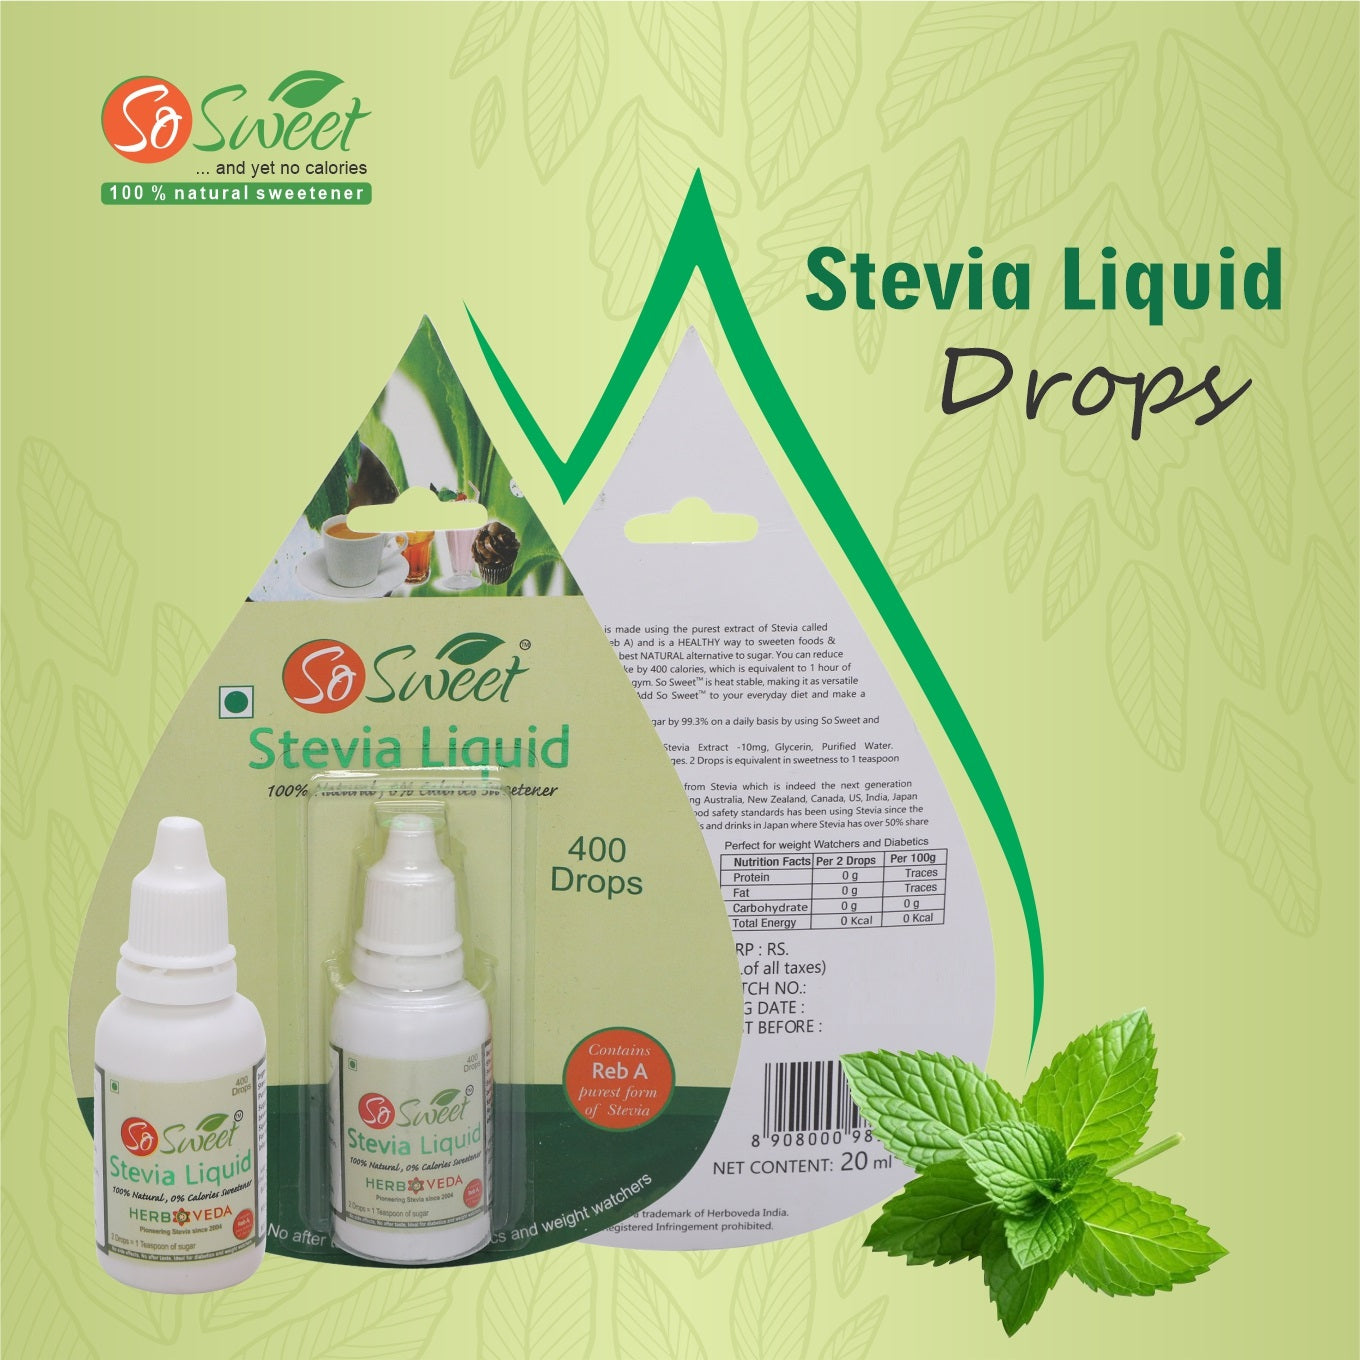 So sweet Stevia Liquid Sugar Free Natural Zero Calorie Sweetener (Pack of 4, 1600 Drops - 400 Drops Each)